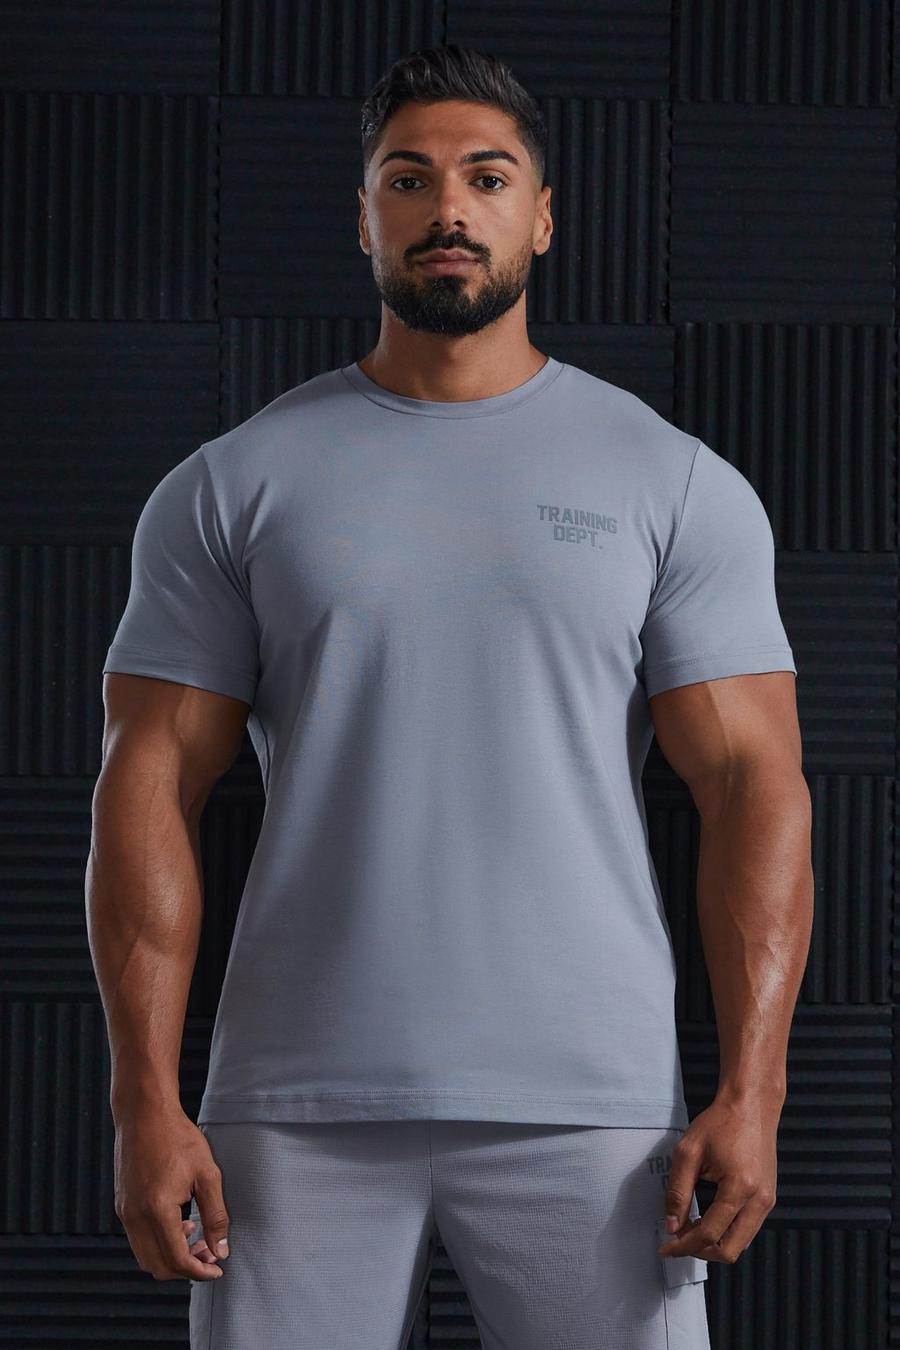 Light grey Active Training Dept Performance Slim T-shirt